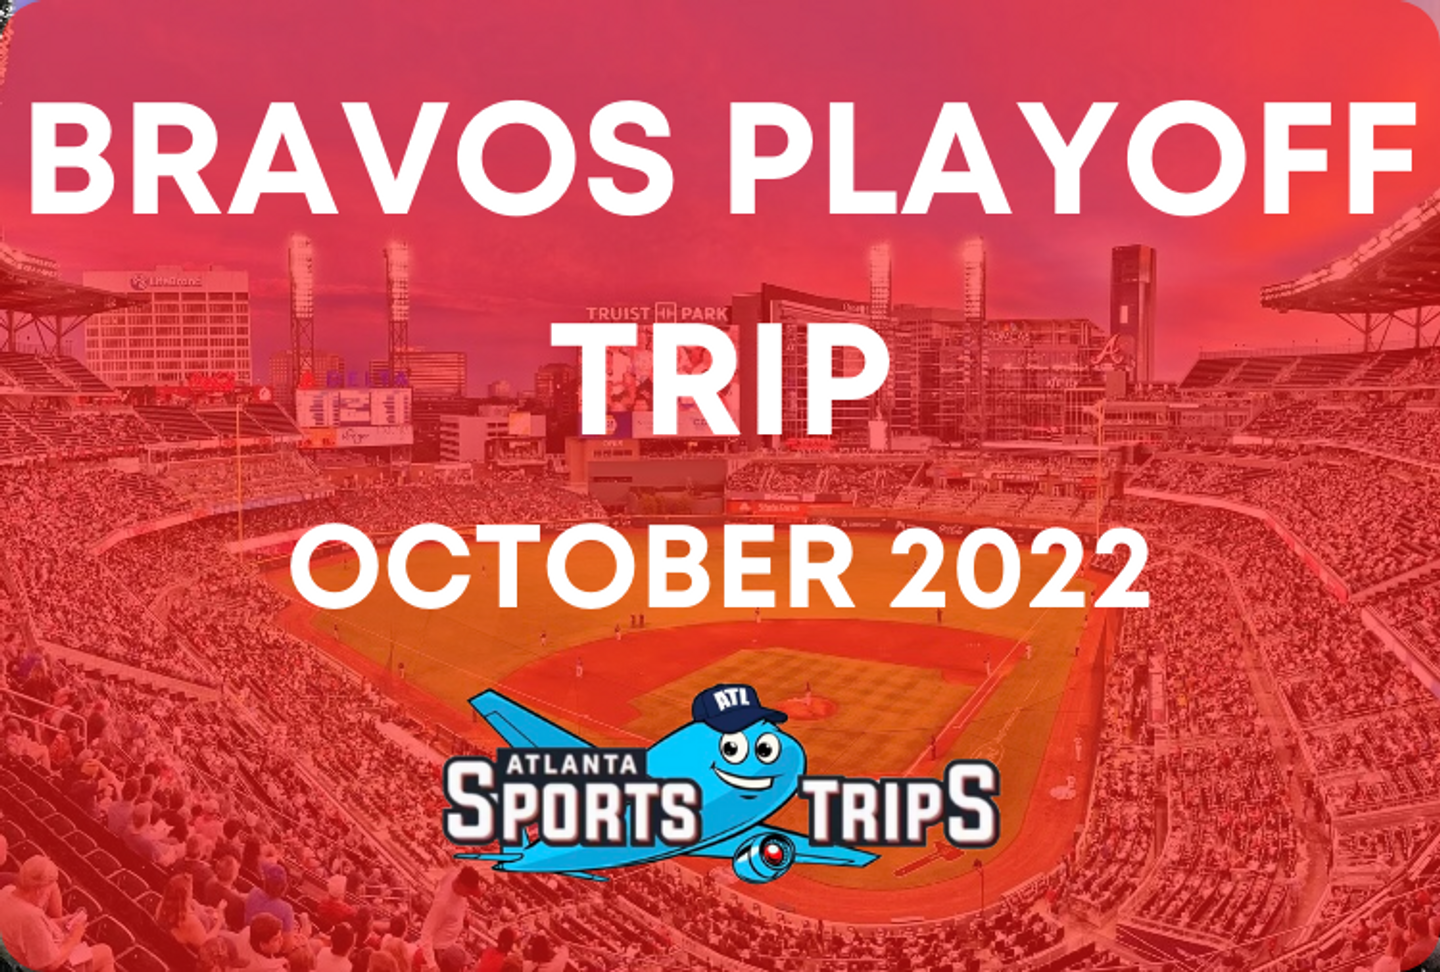 Bravos Playoff Trip 2022